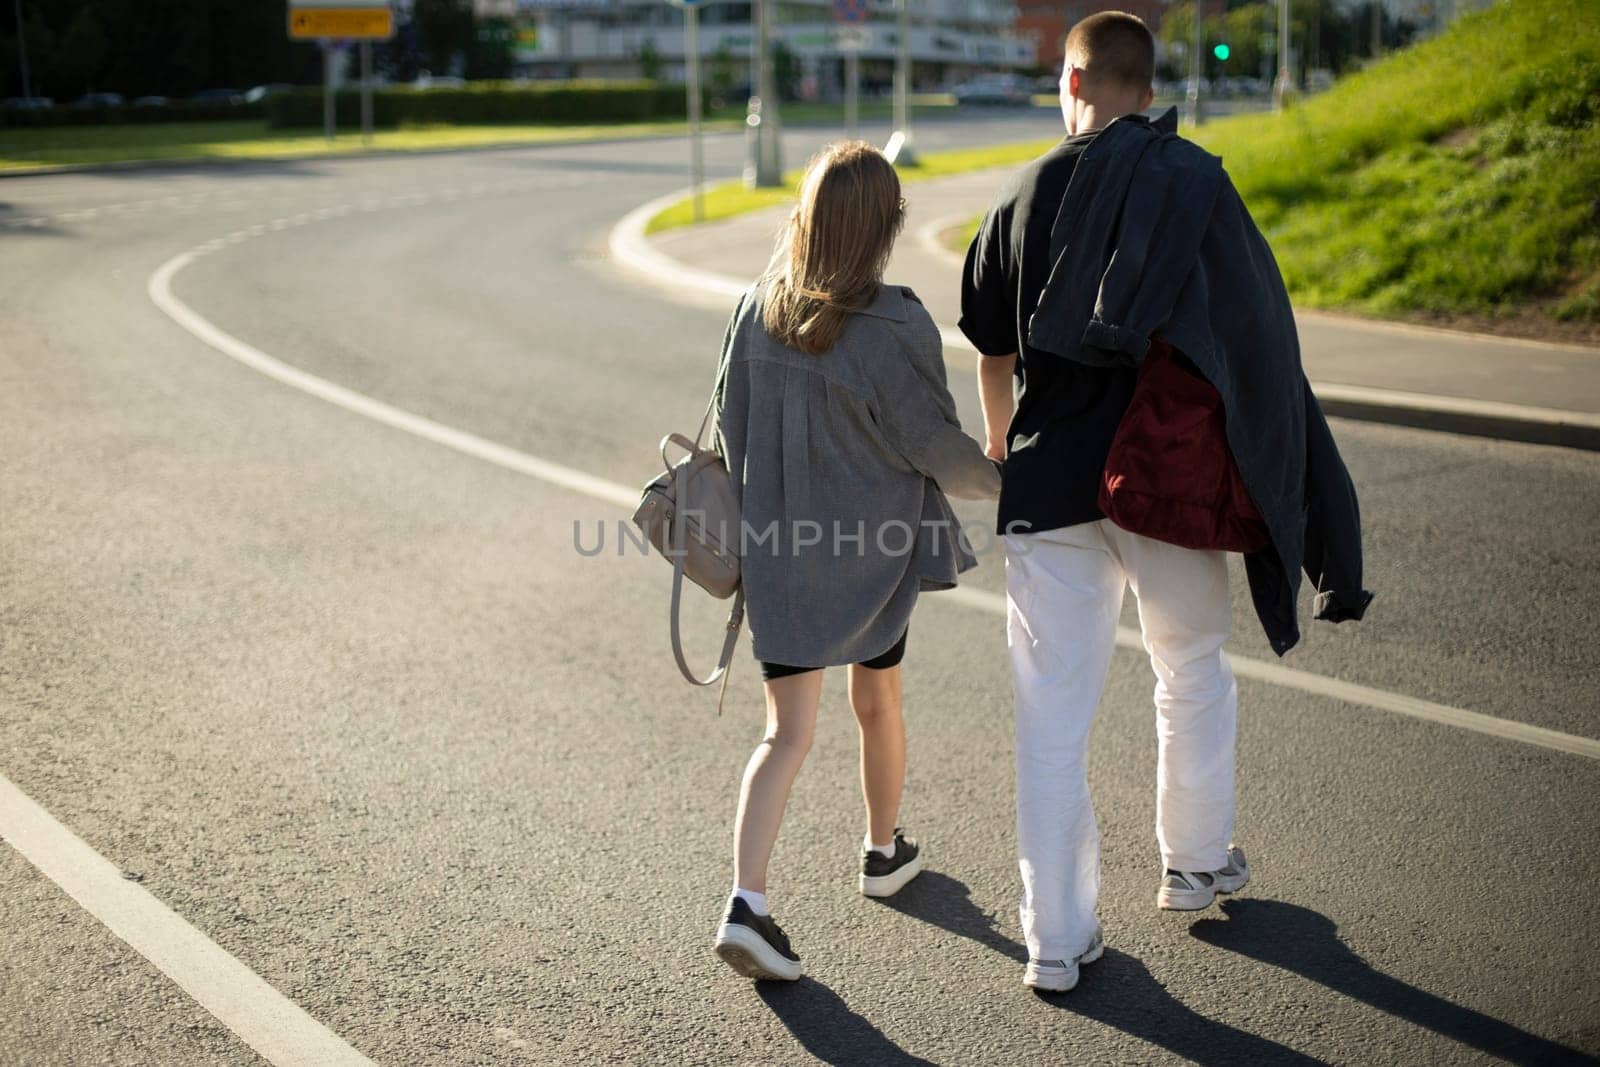 Guy and girl cross road. People are walking on road. People in city in summer. by OlegKopyov